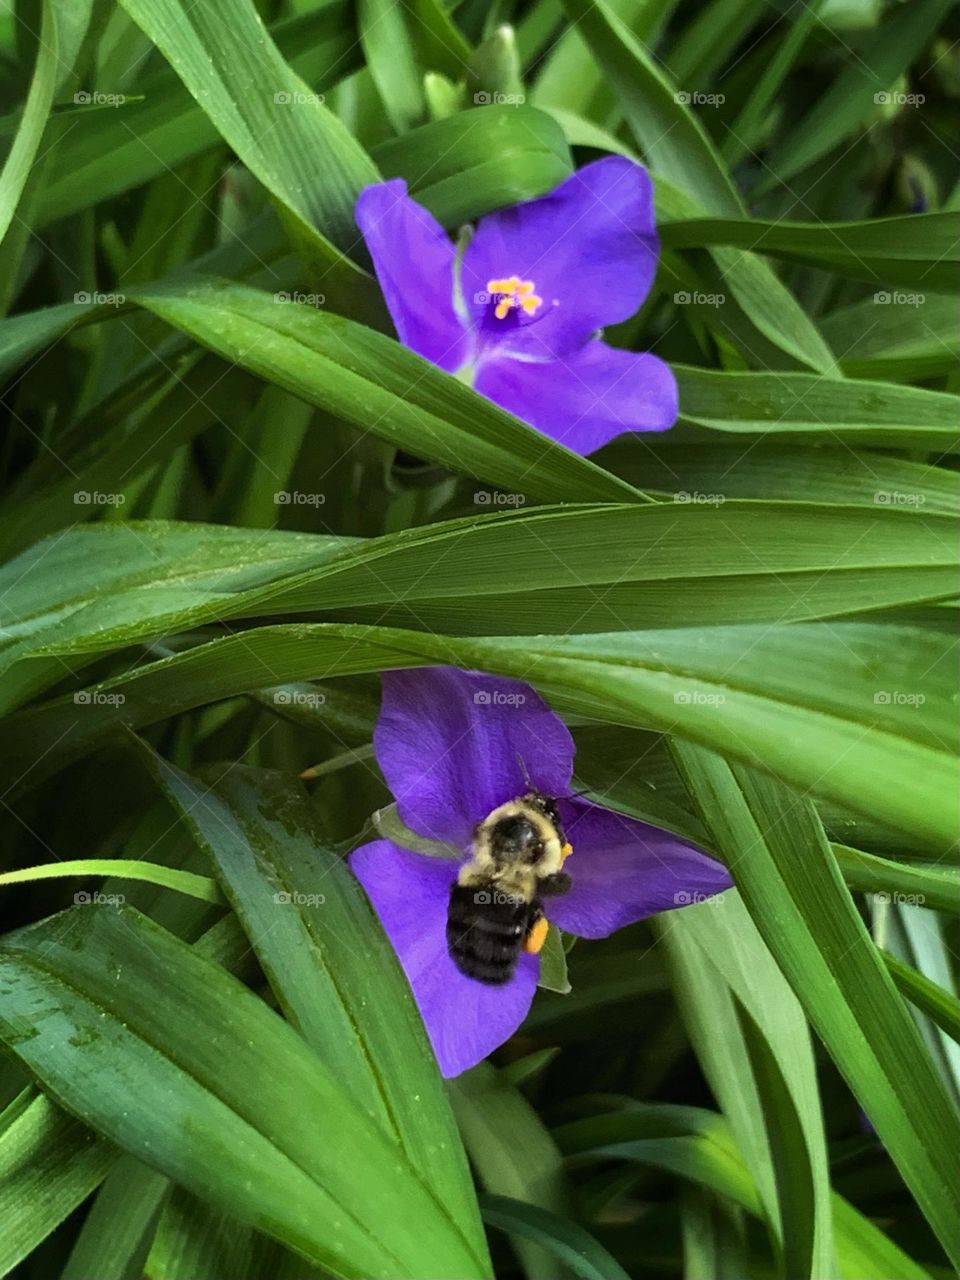 A bee on the Virginia spiderwort